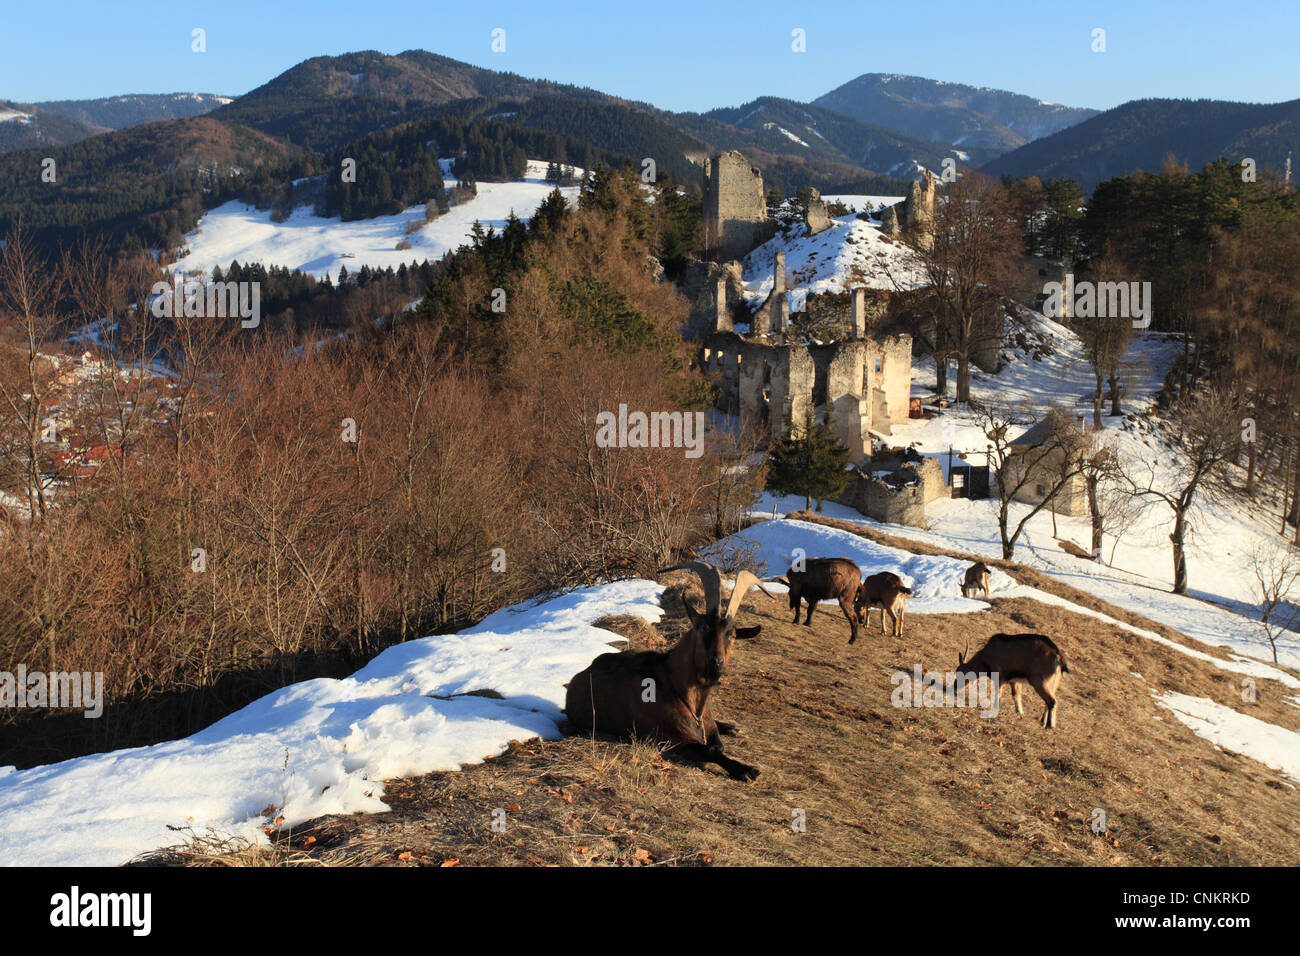 The French Alpine goats (Capra aegagrus hircus) grazing near the castle Sklabina in the Velka Fatra National Park, Slovakia. Stock Photo